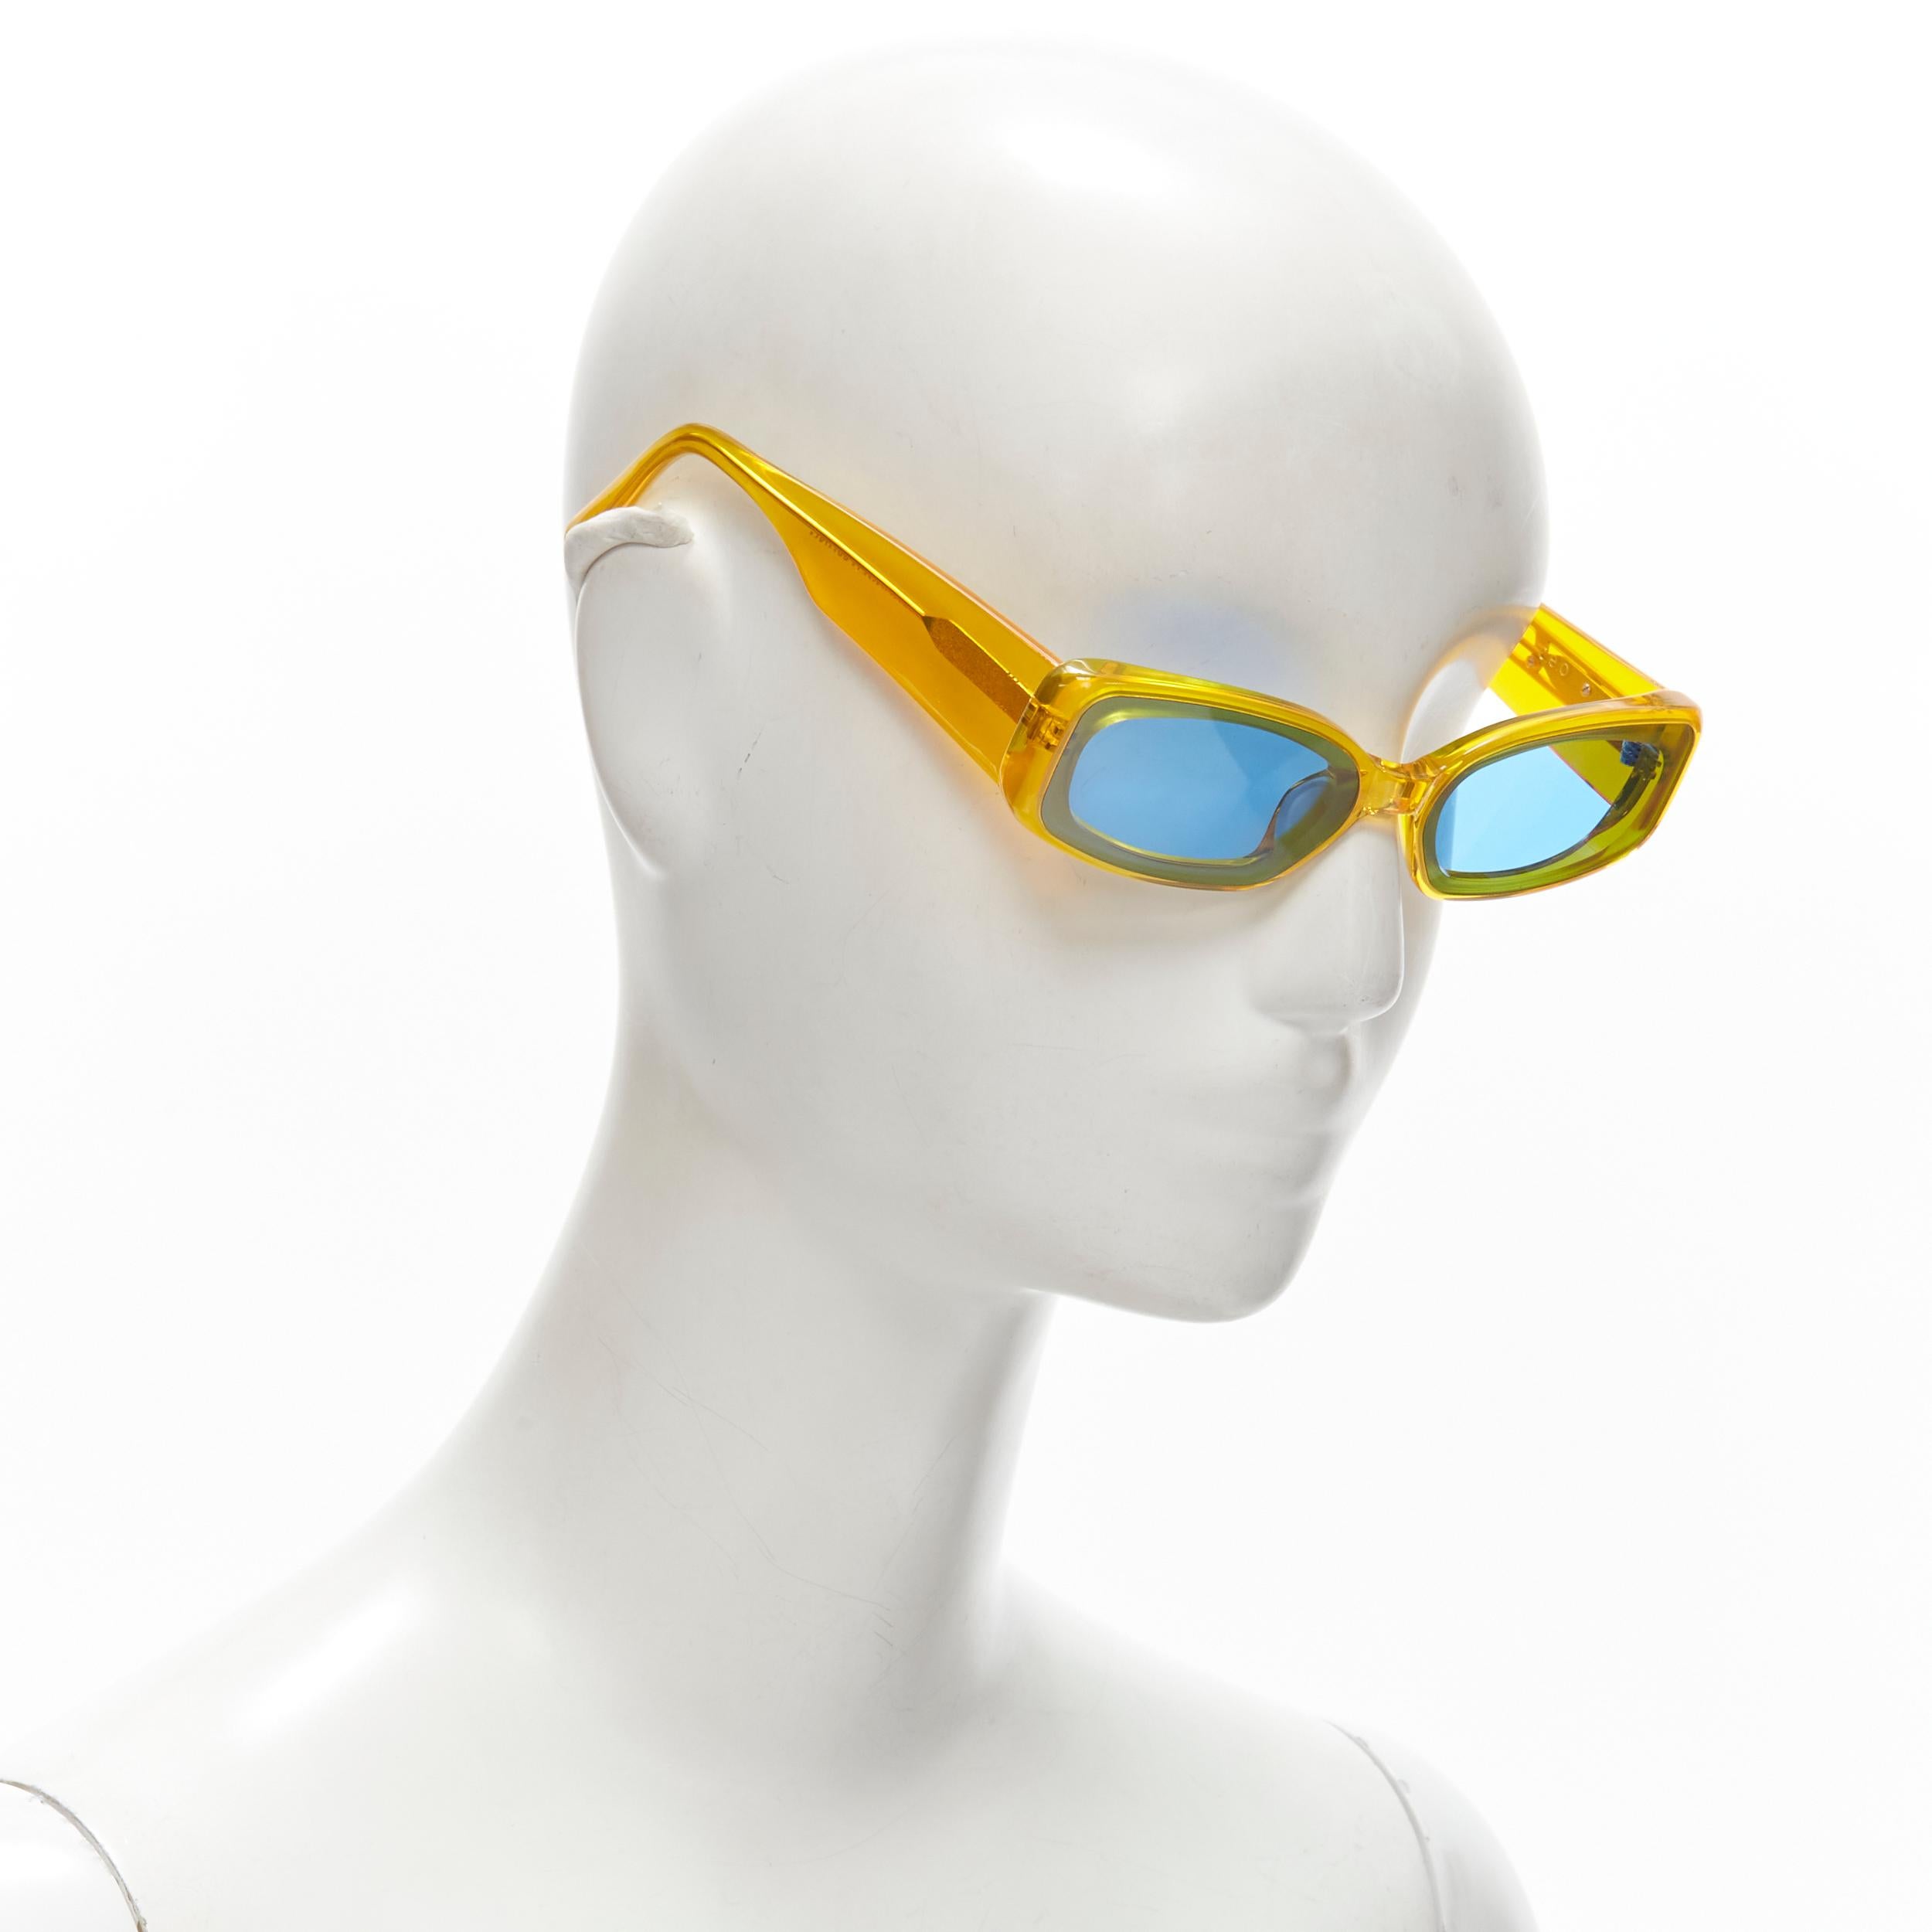 alexander wang ceo sunglasses